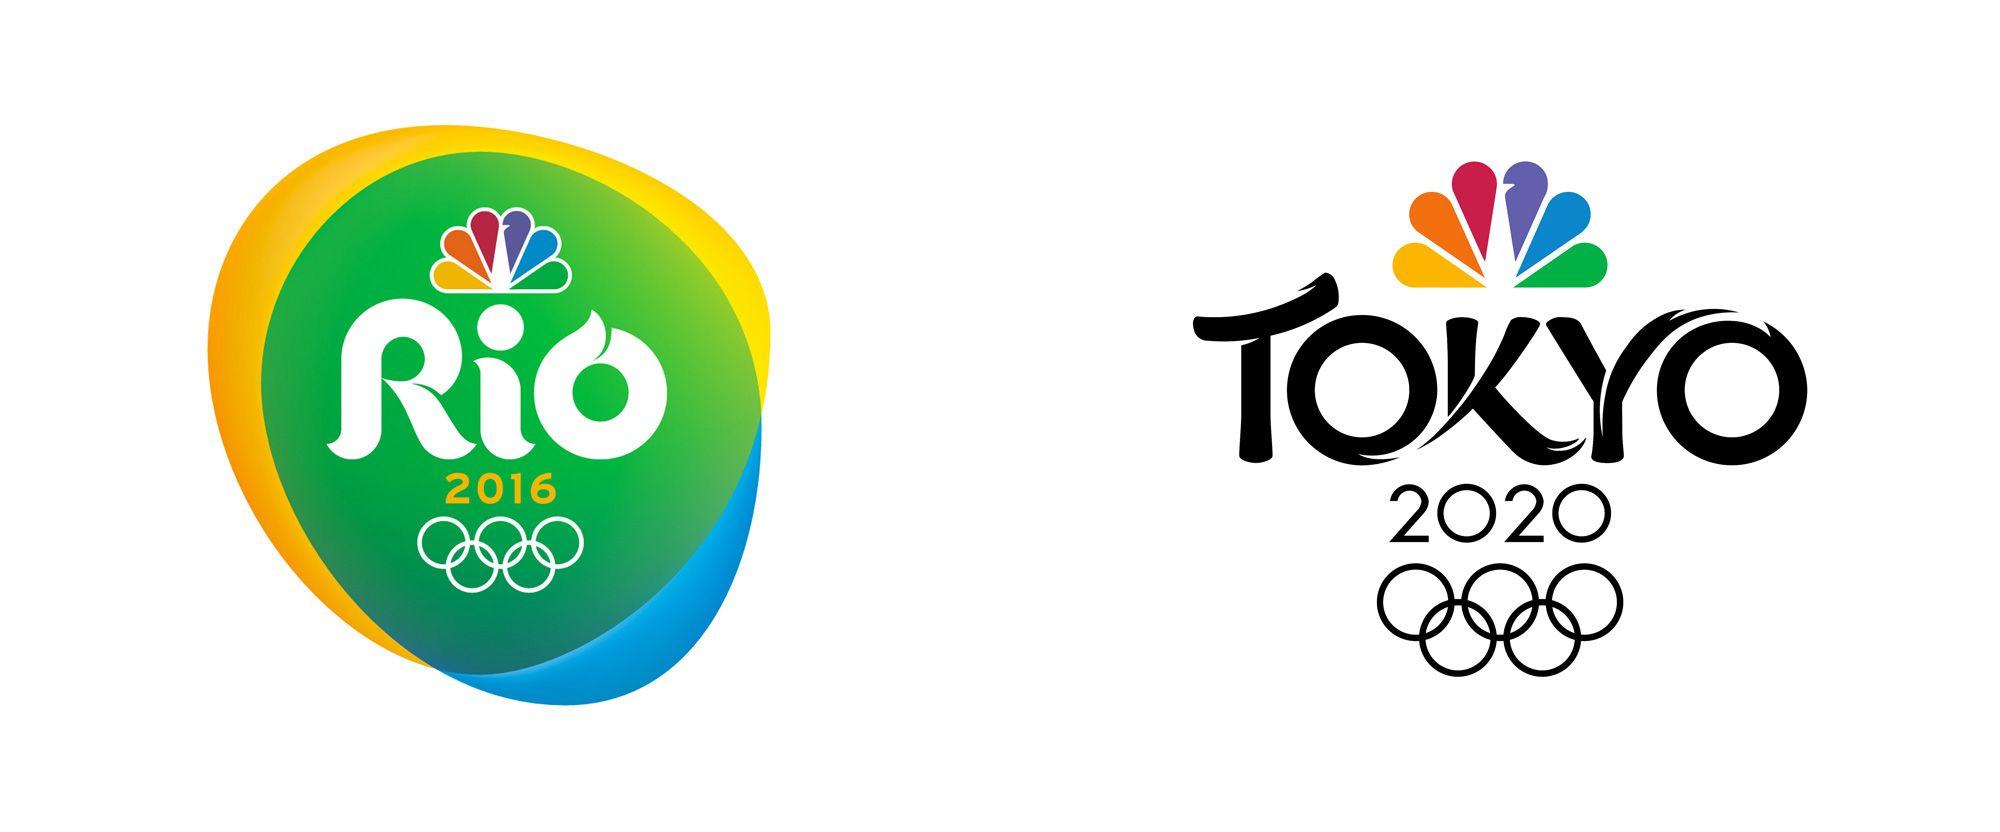 NBC.com Logo - Brand New: New Logo for NBC Olympics 2020 Broadcast by Mocean